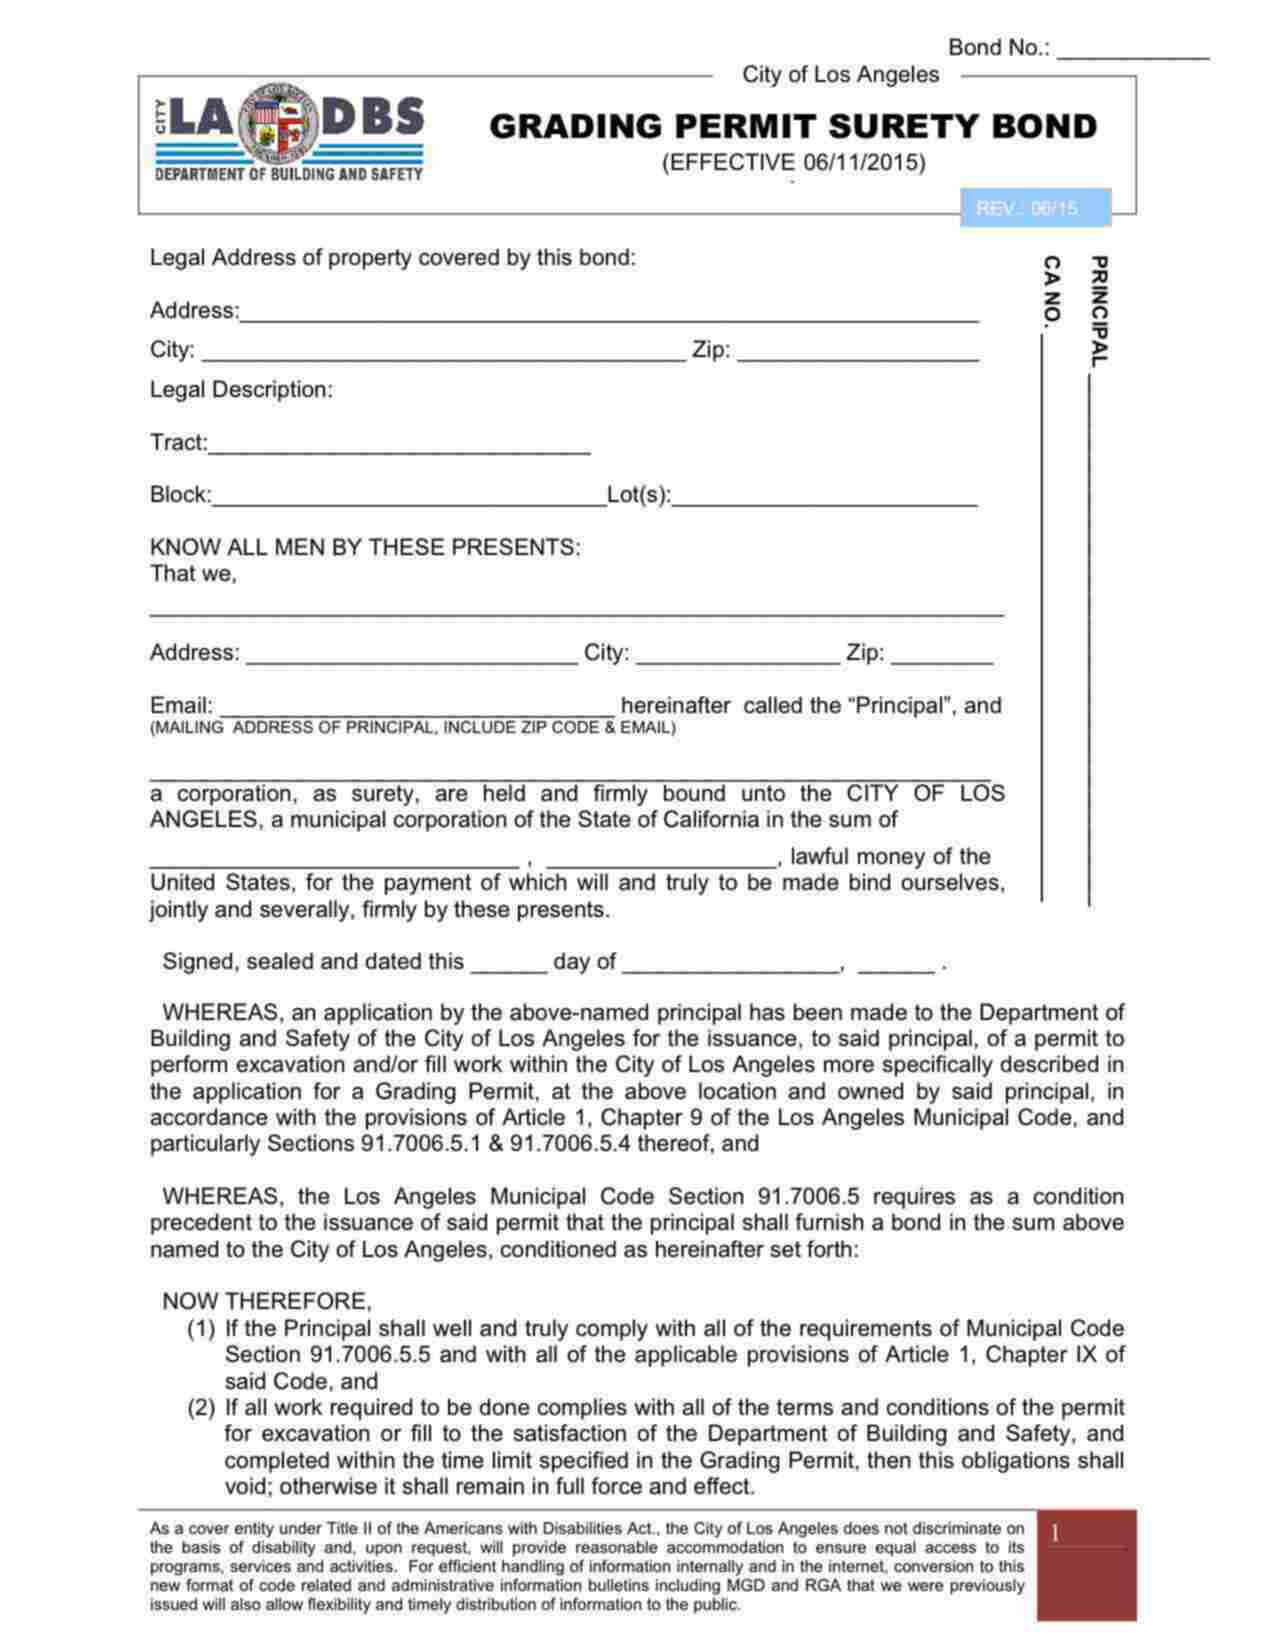 California Grading Permit Bond Form